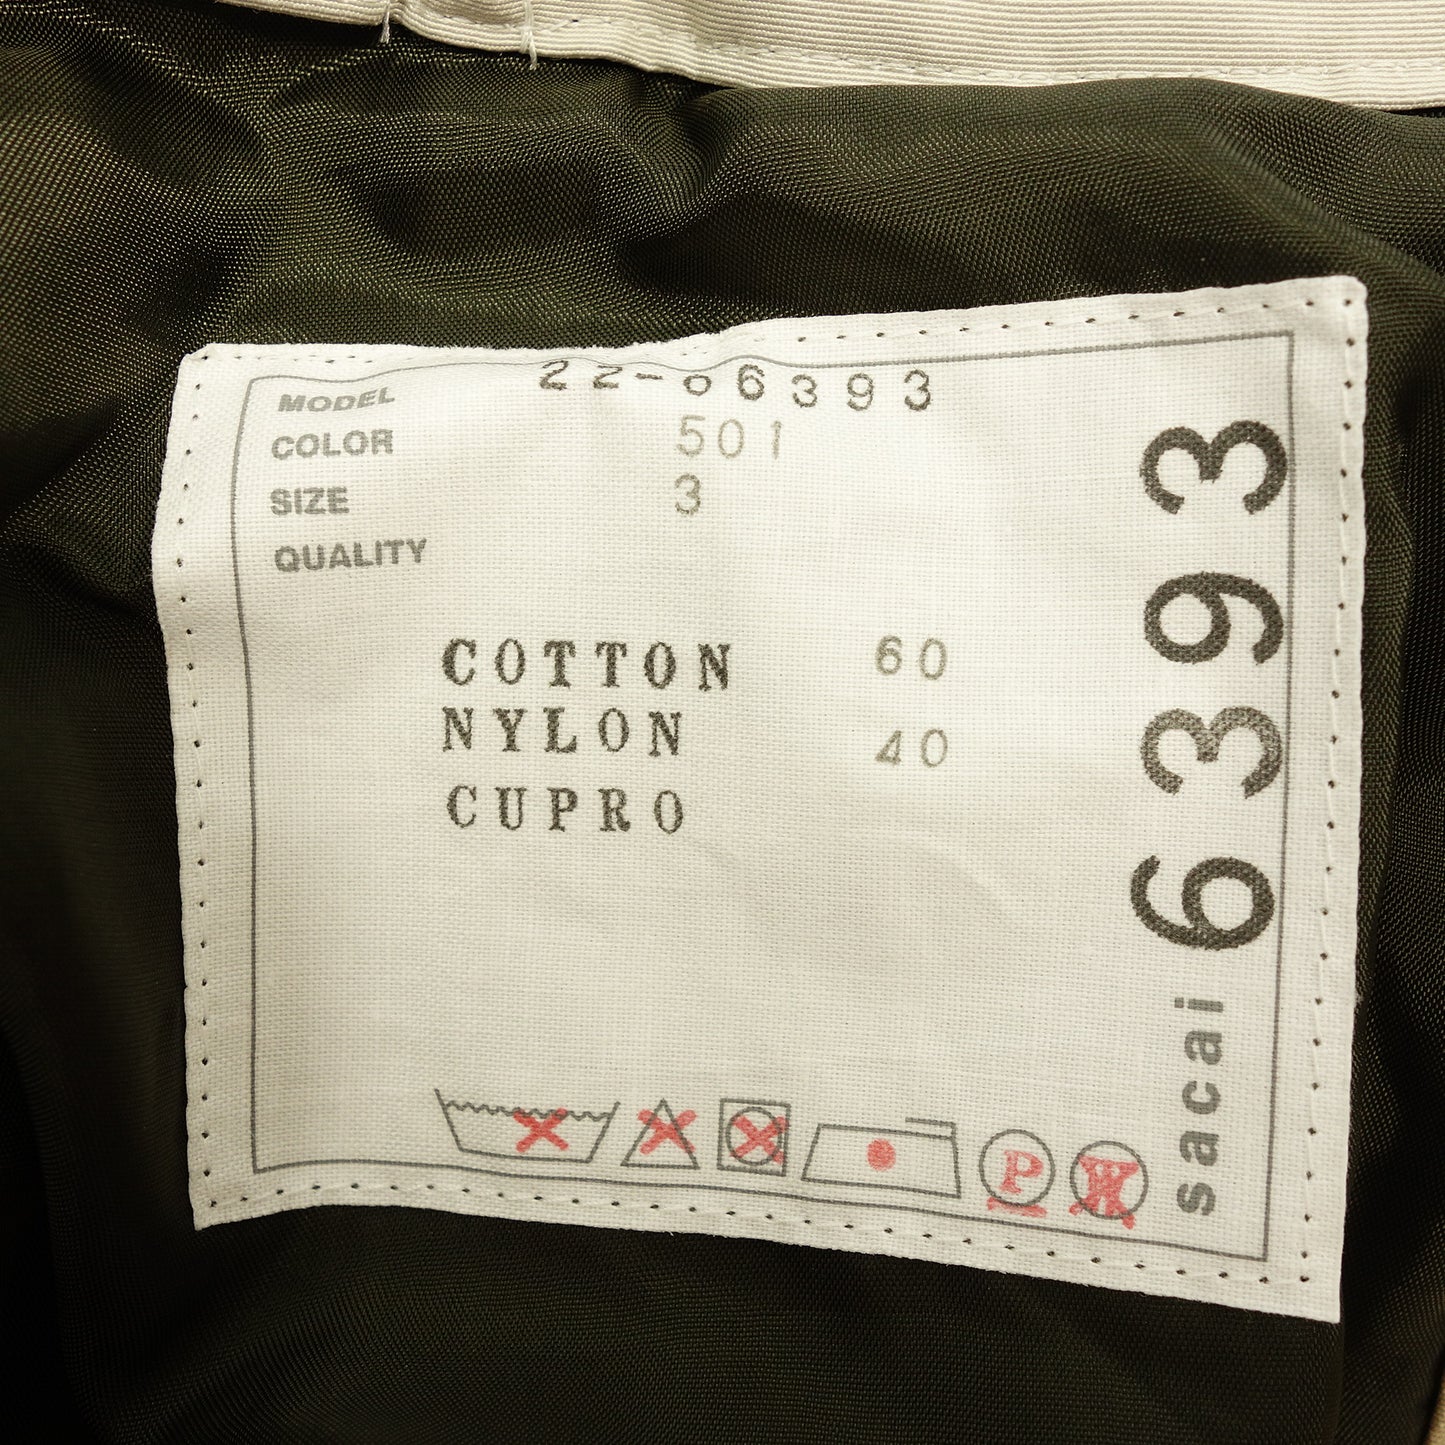 Good Condition◆Sacai Pleated Skirt Bicolor Belt 22-06393 Khaki Beige Size 3 Women's Sacai [AFB32] 